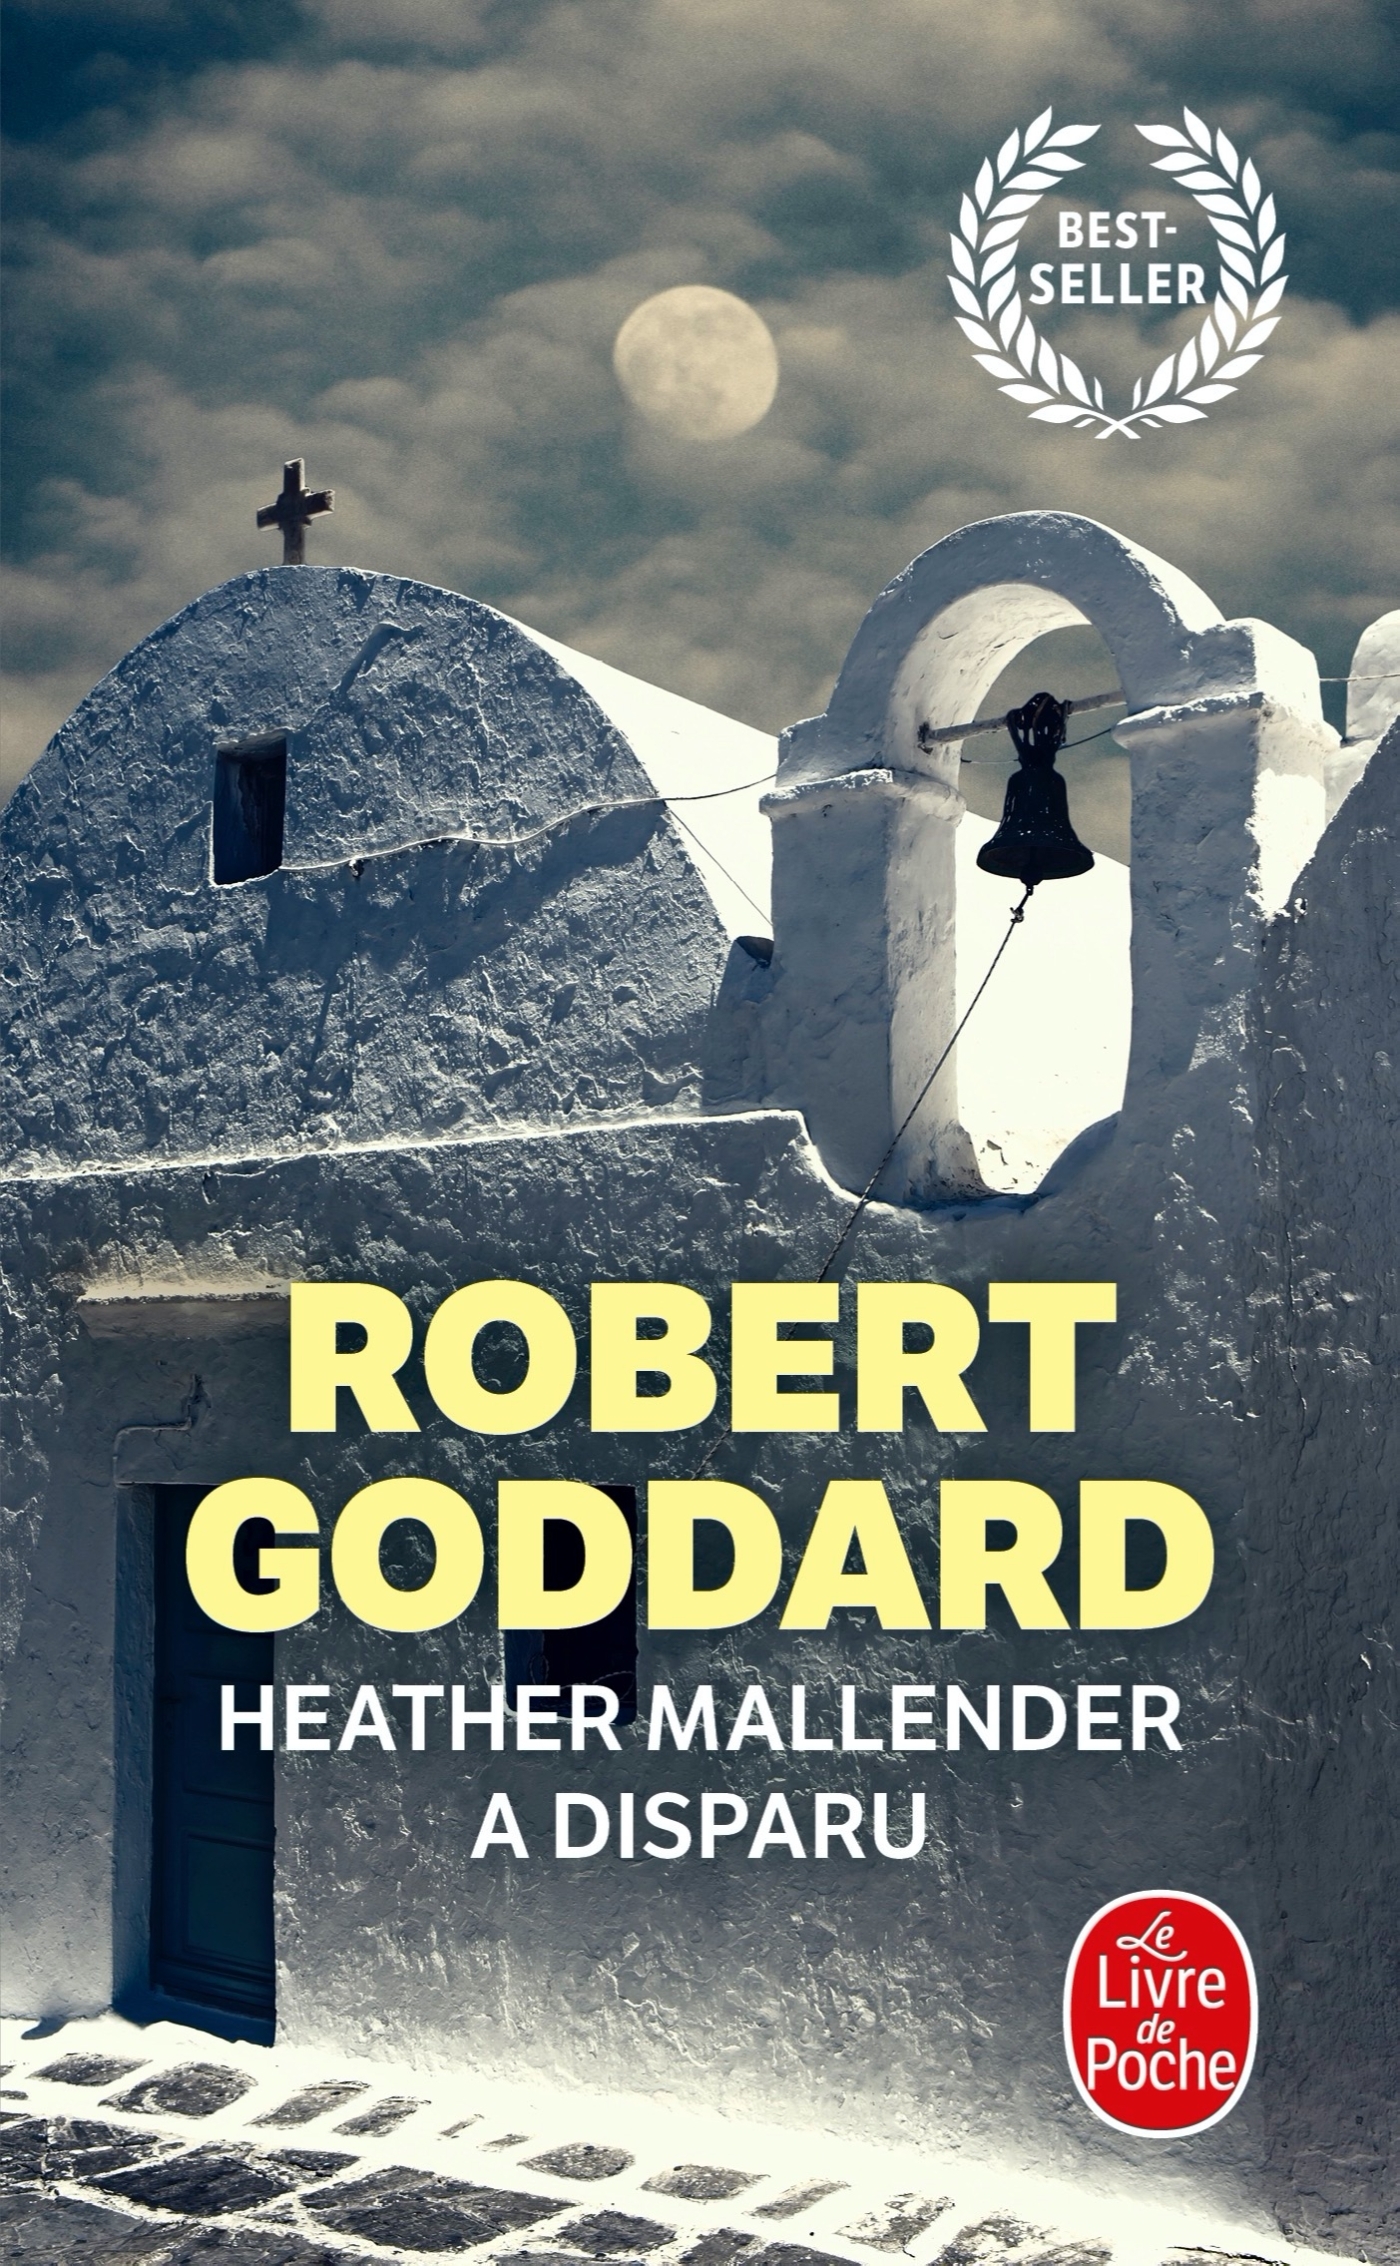 Heather Mallender a disparu (9782253169536-front-cover)